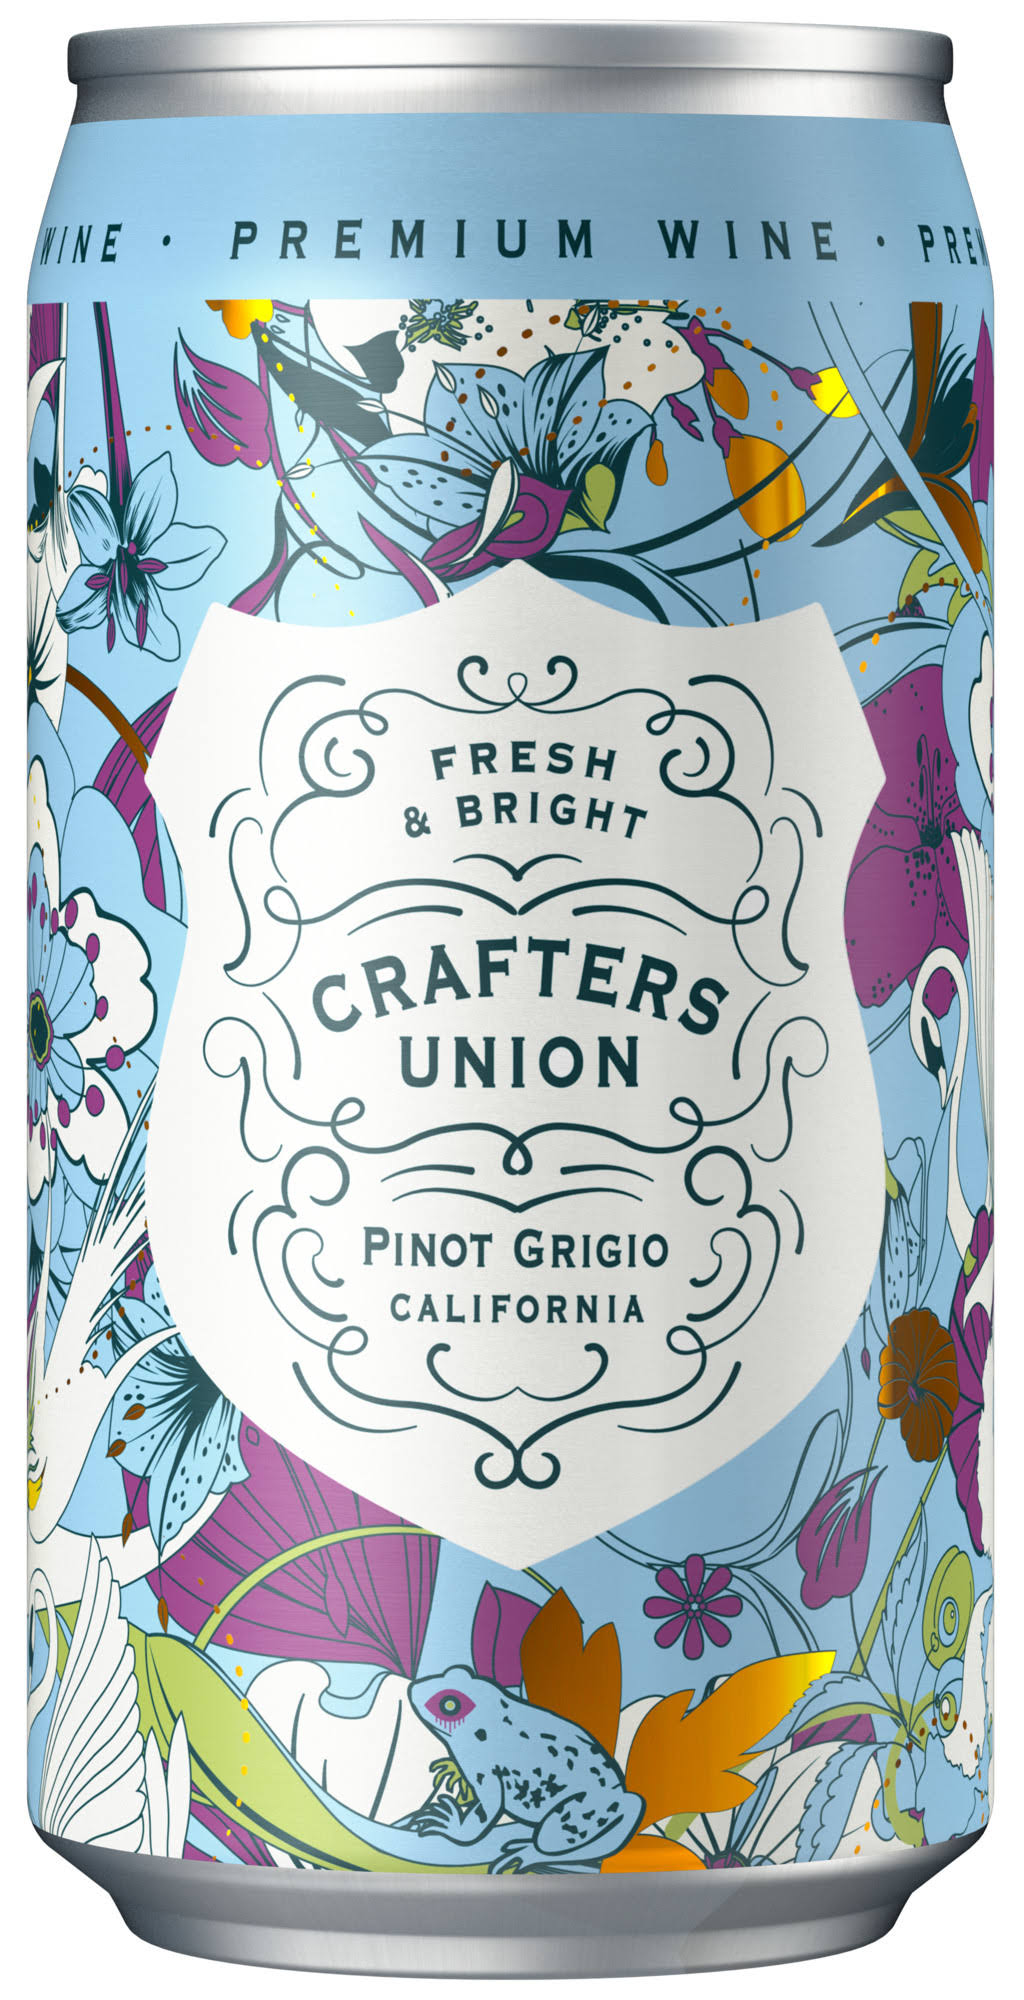 Crafters Union Pinot Grigio, California, 2017 - 375 ml